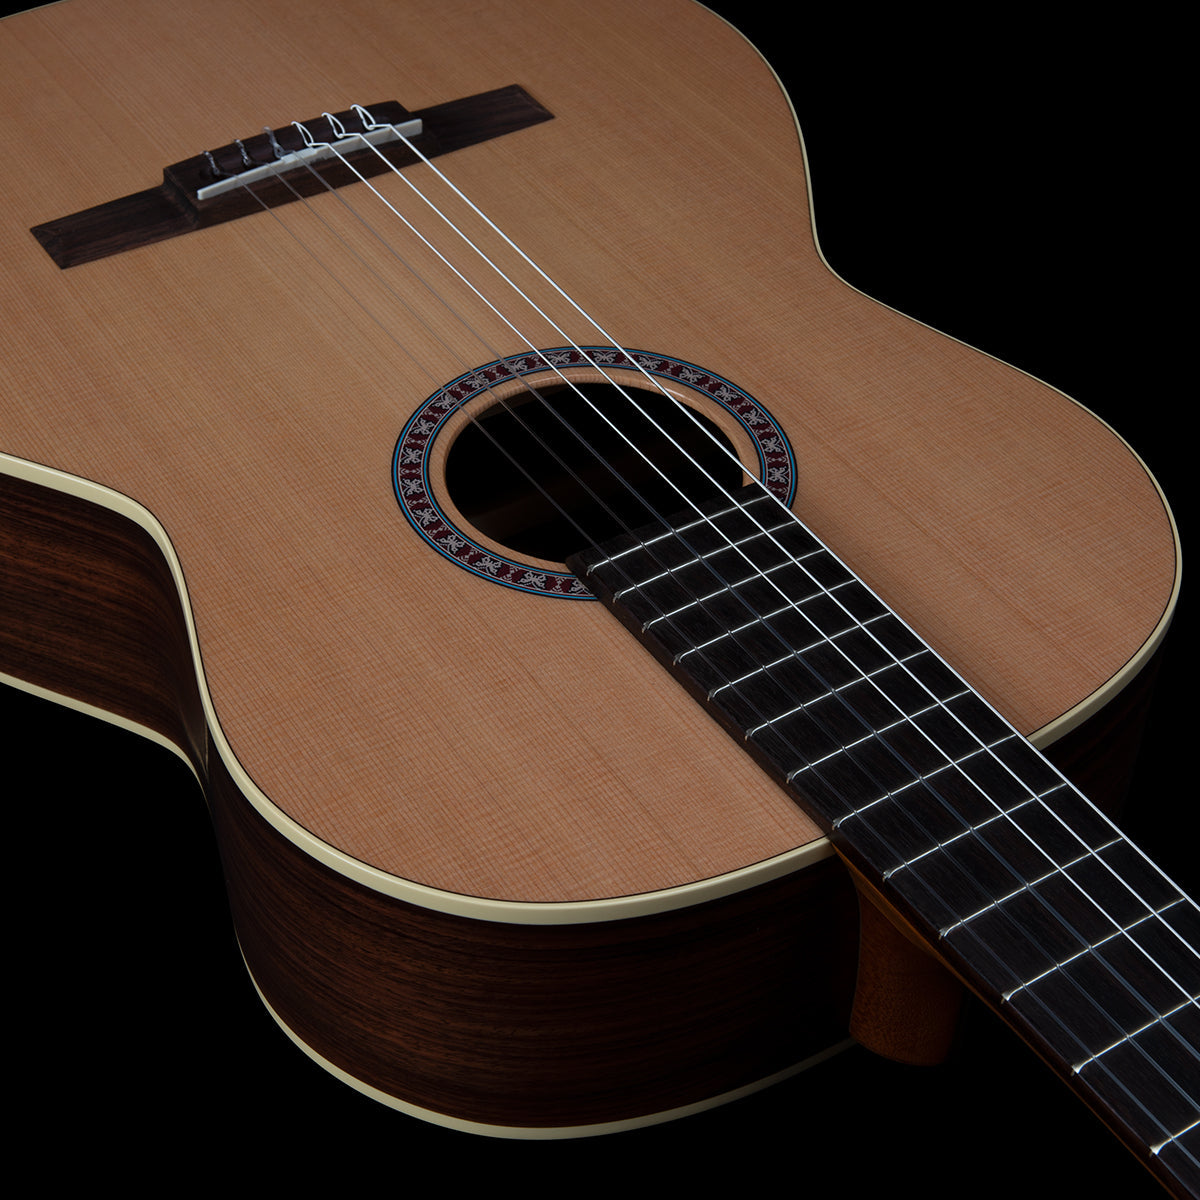 Godin Presentation Clasica II Nylon String Electro Guitar,  for sale at Richards Guitars.